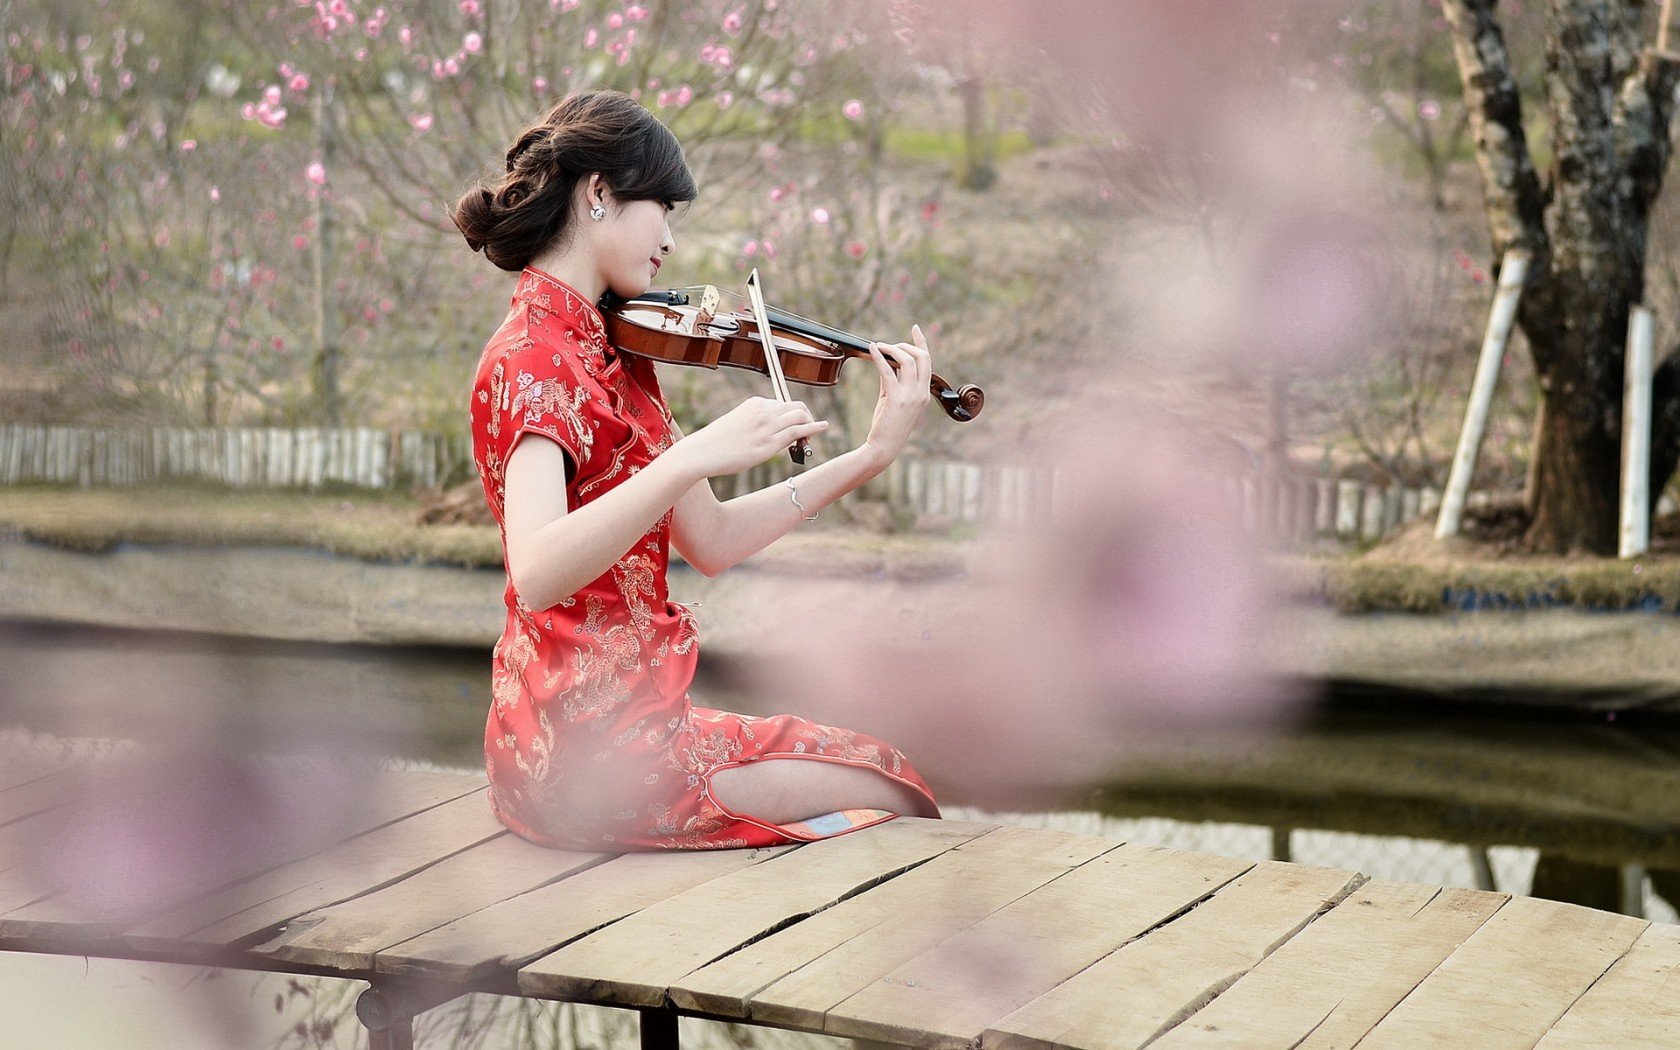 women, Model, Brunette, Long hair, Asian, Women outdoors, Violin, Playing, Sitting, Pier, Wooden surface, River, Trees, Flowers, Red dress Wallpaper